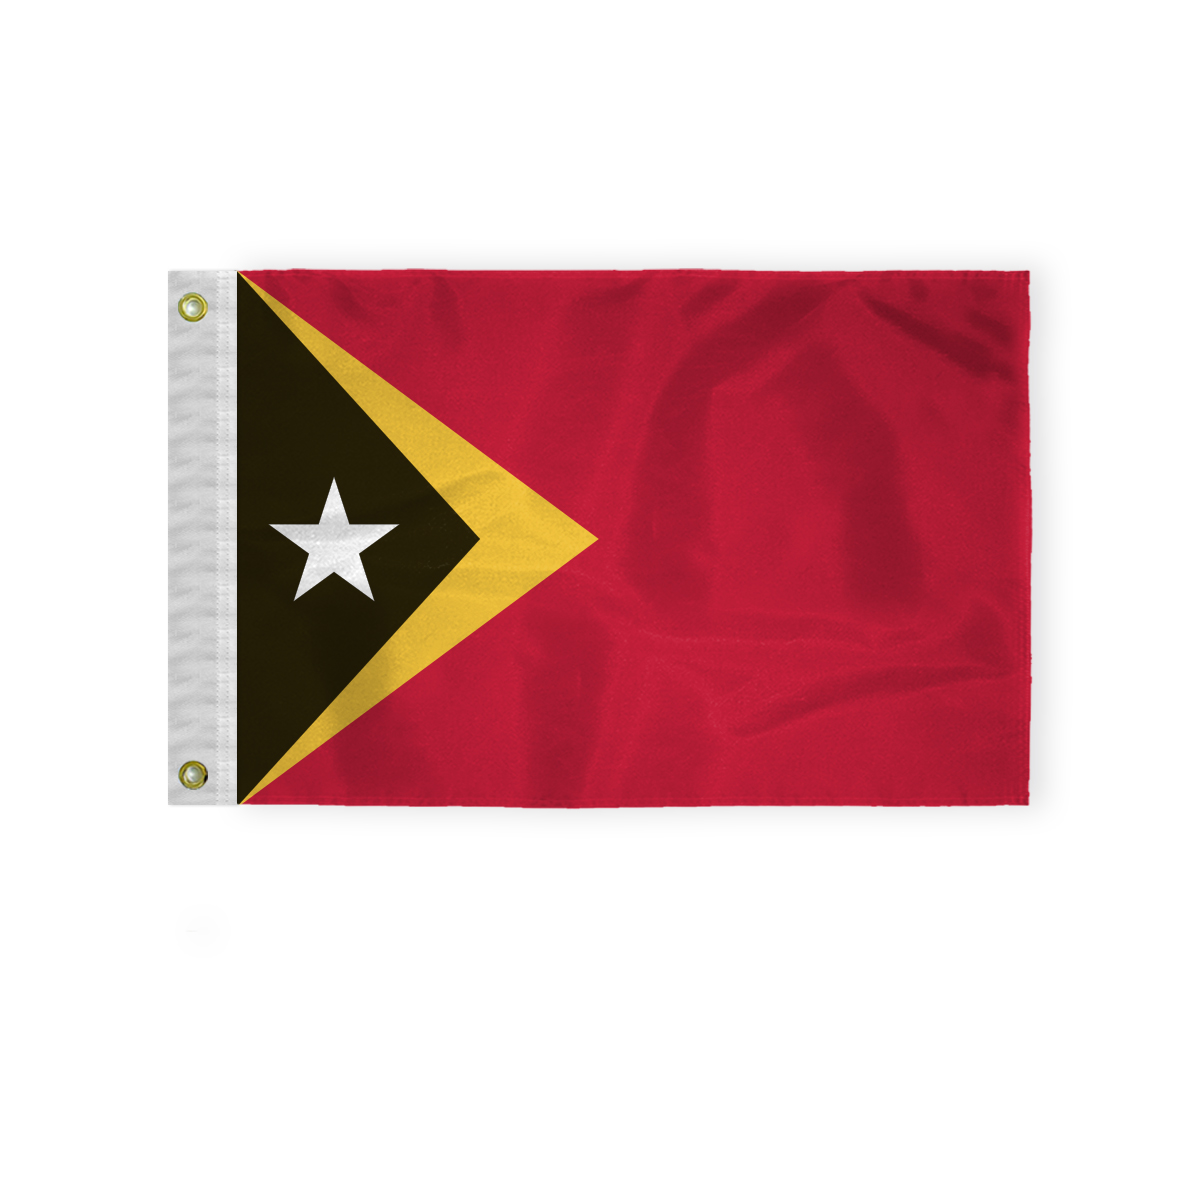 AGAS East Timor Nautical Flag 12x18 inch